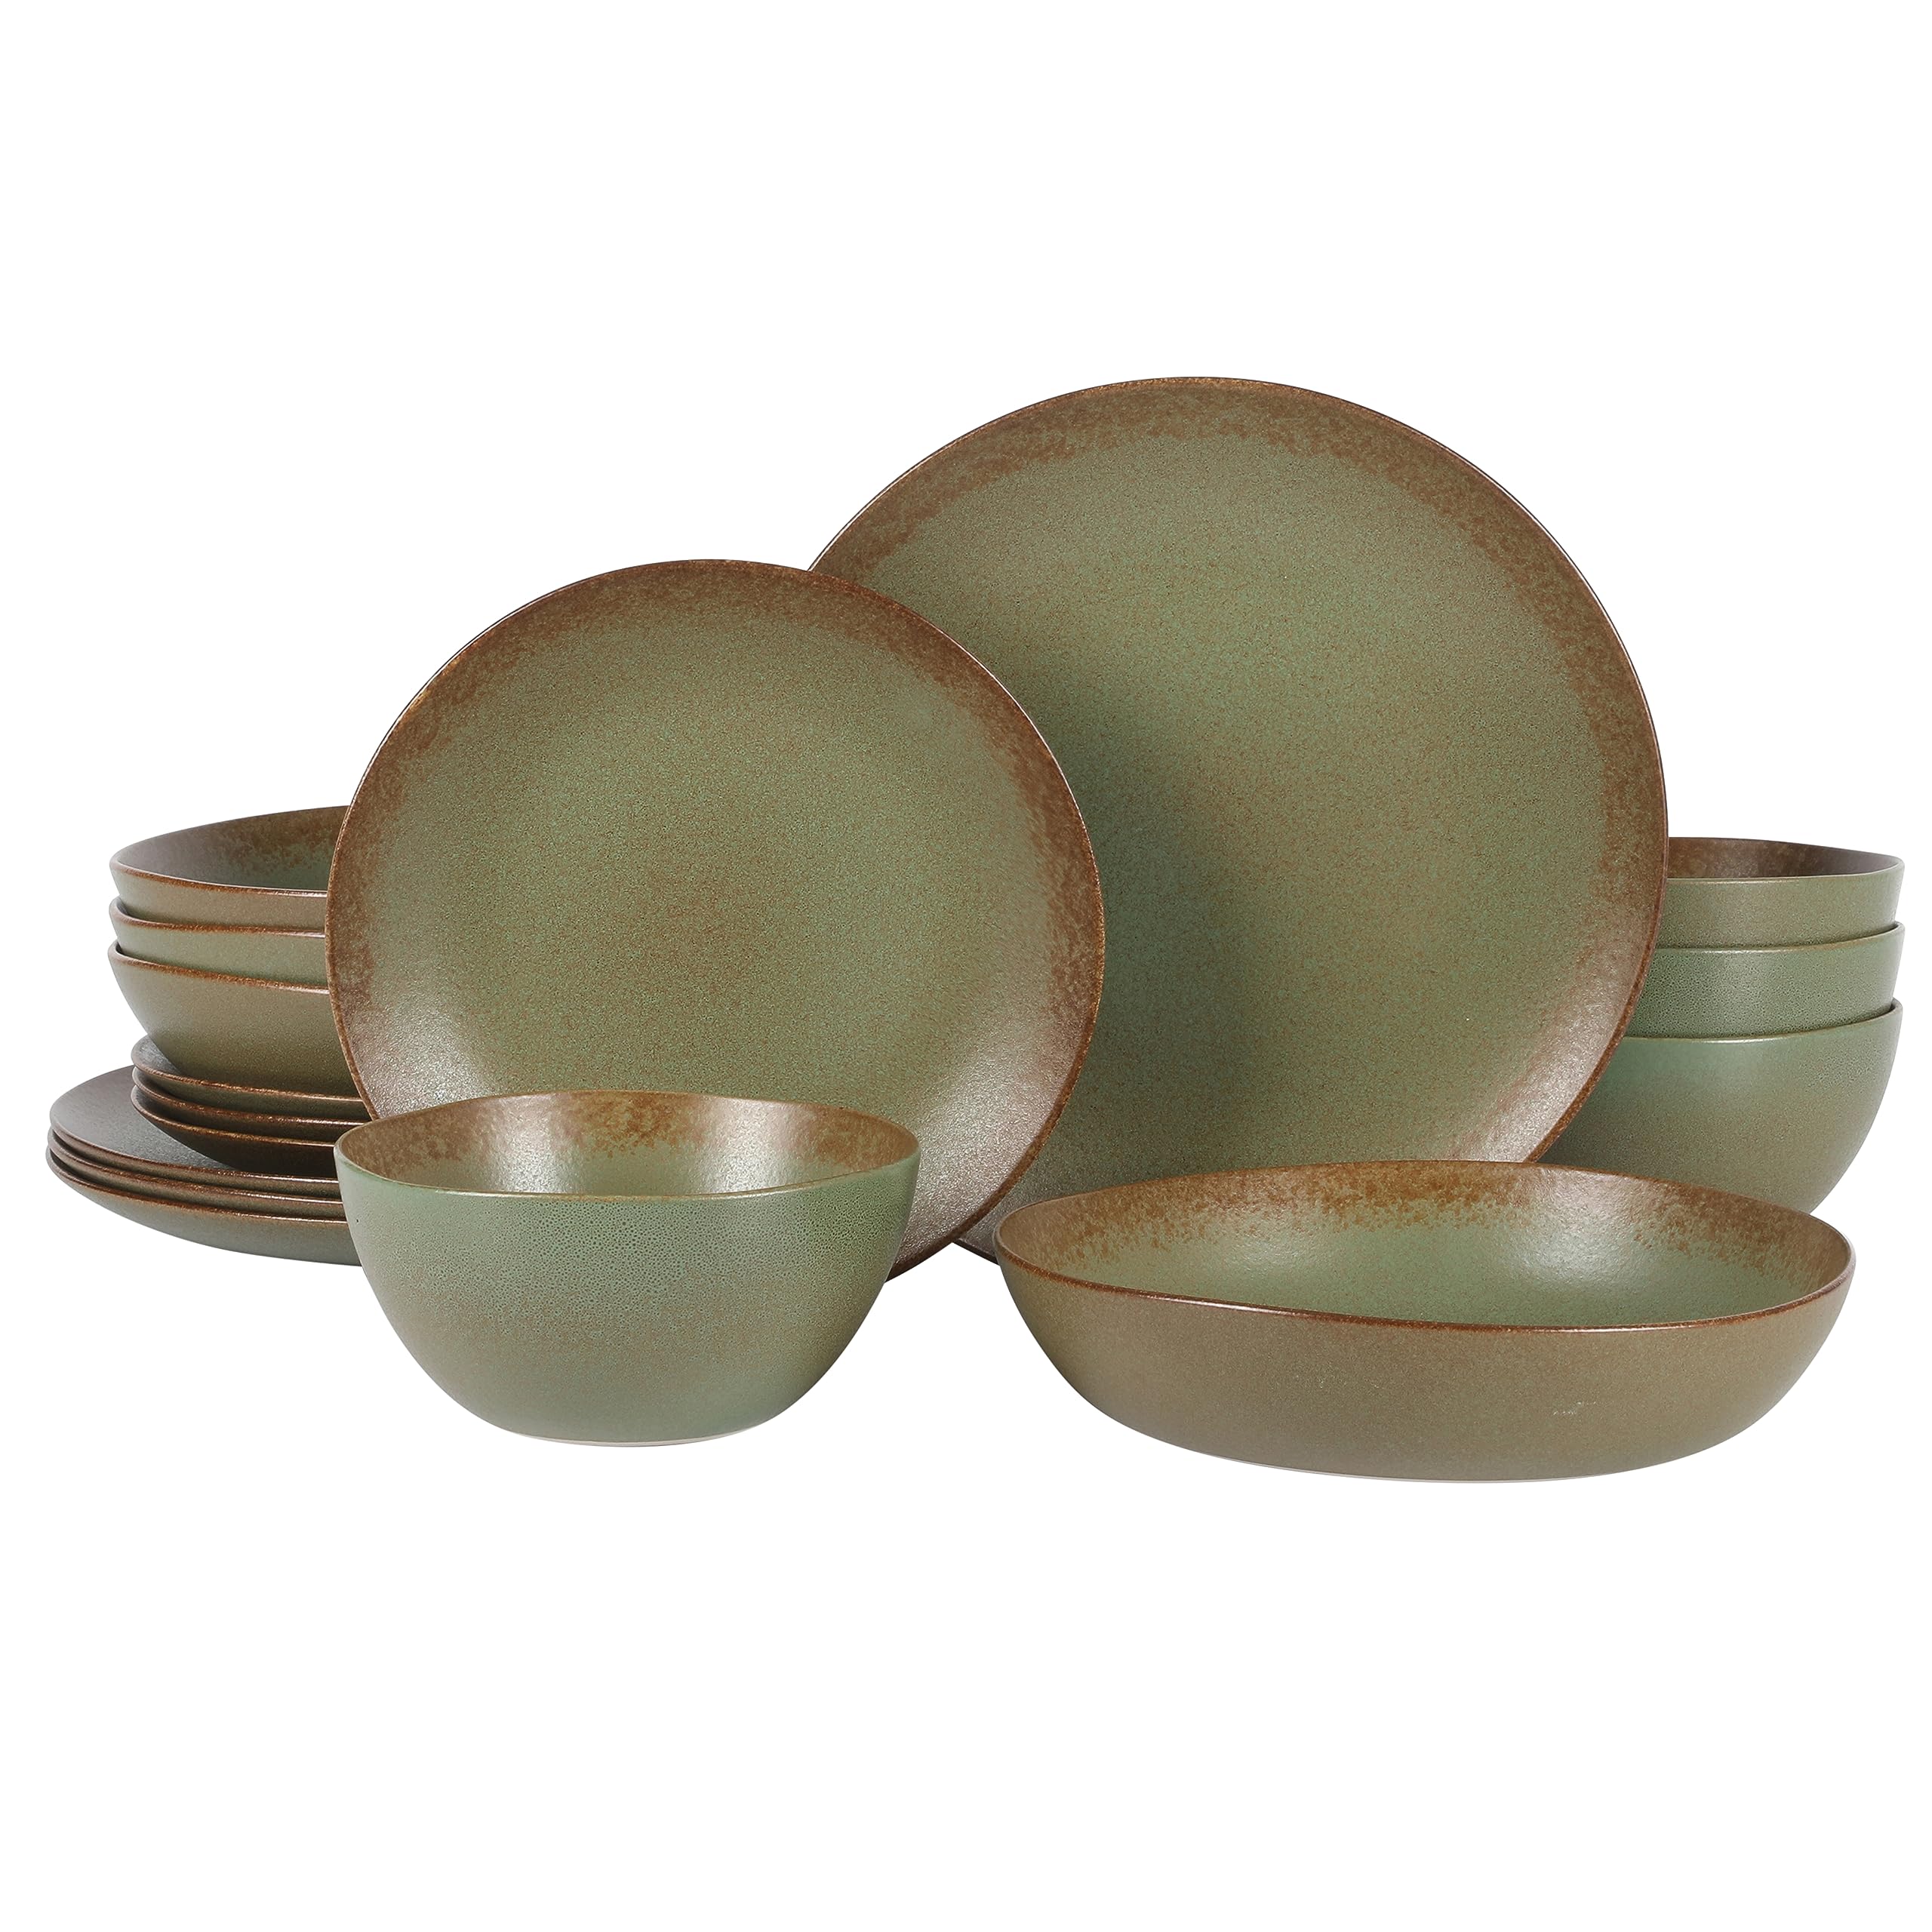 Bloomhouse Palermo Sun 16 Piece Double Bowl Stoneware Reactive Glaze Plates and Bowls Dinnerware Set - Cardamom Green